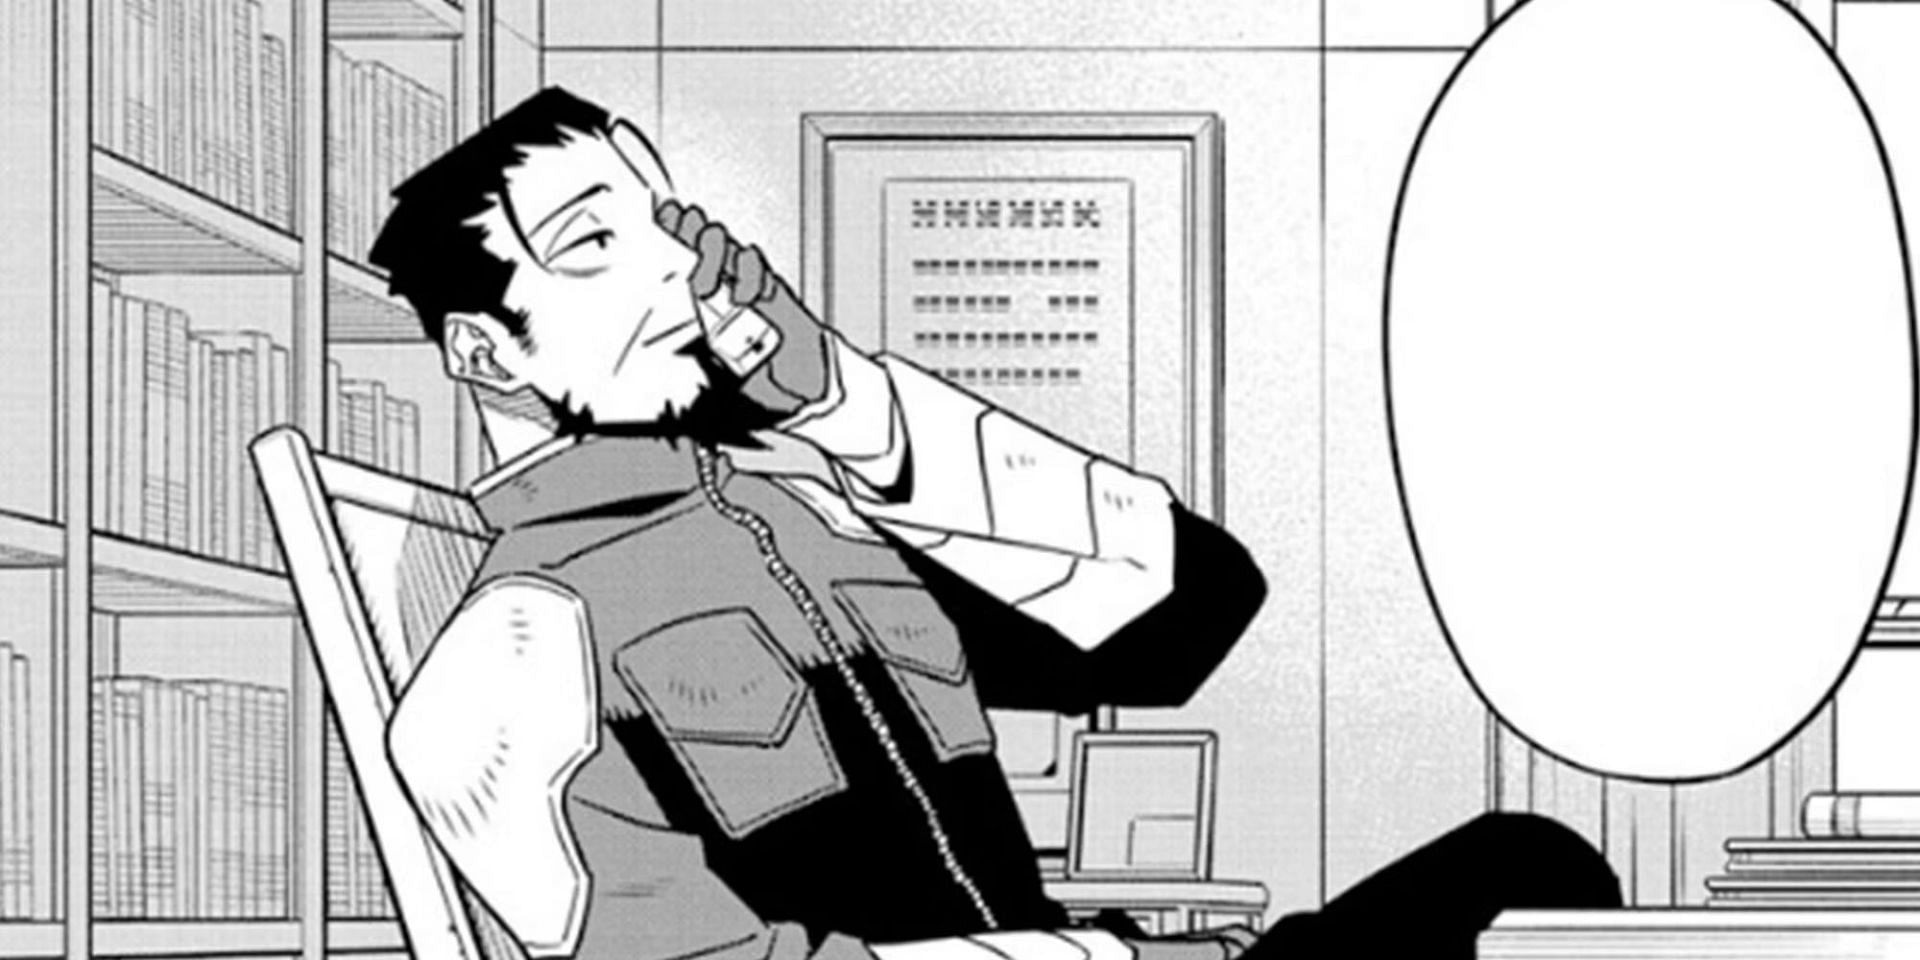 Ogata as seen in the manga (Image via Shueisha)